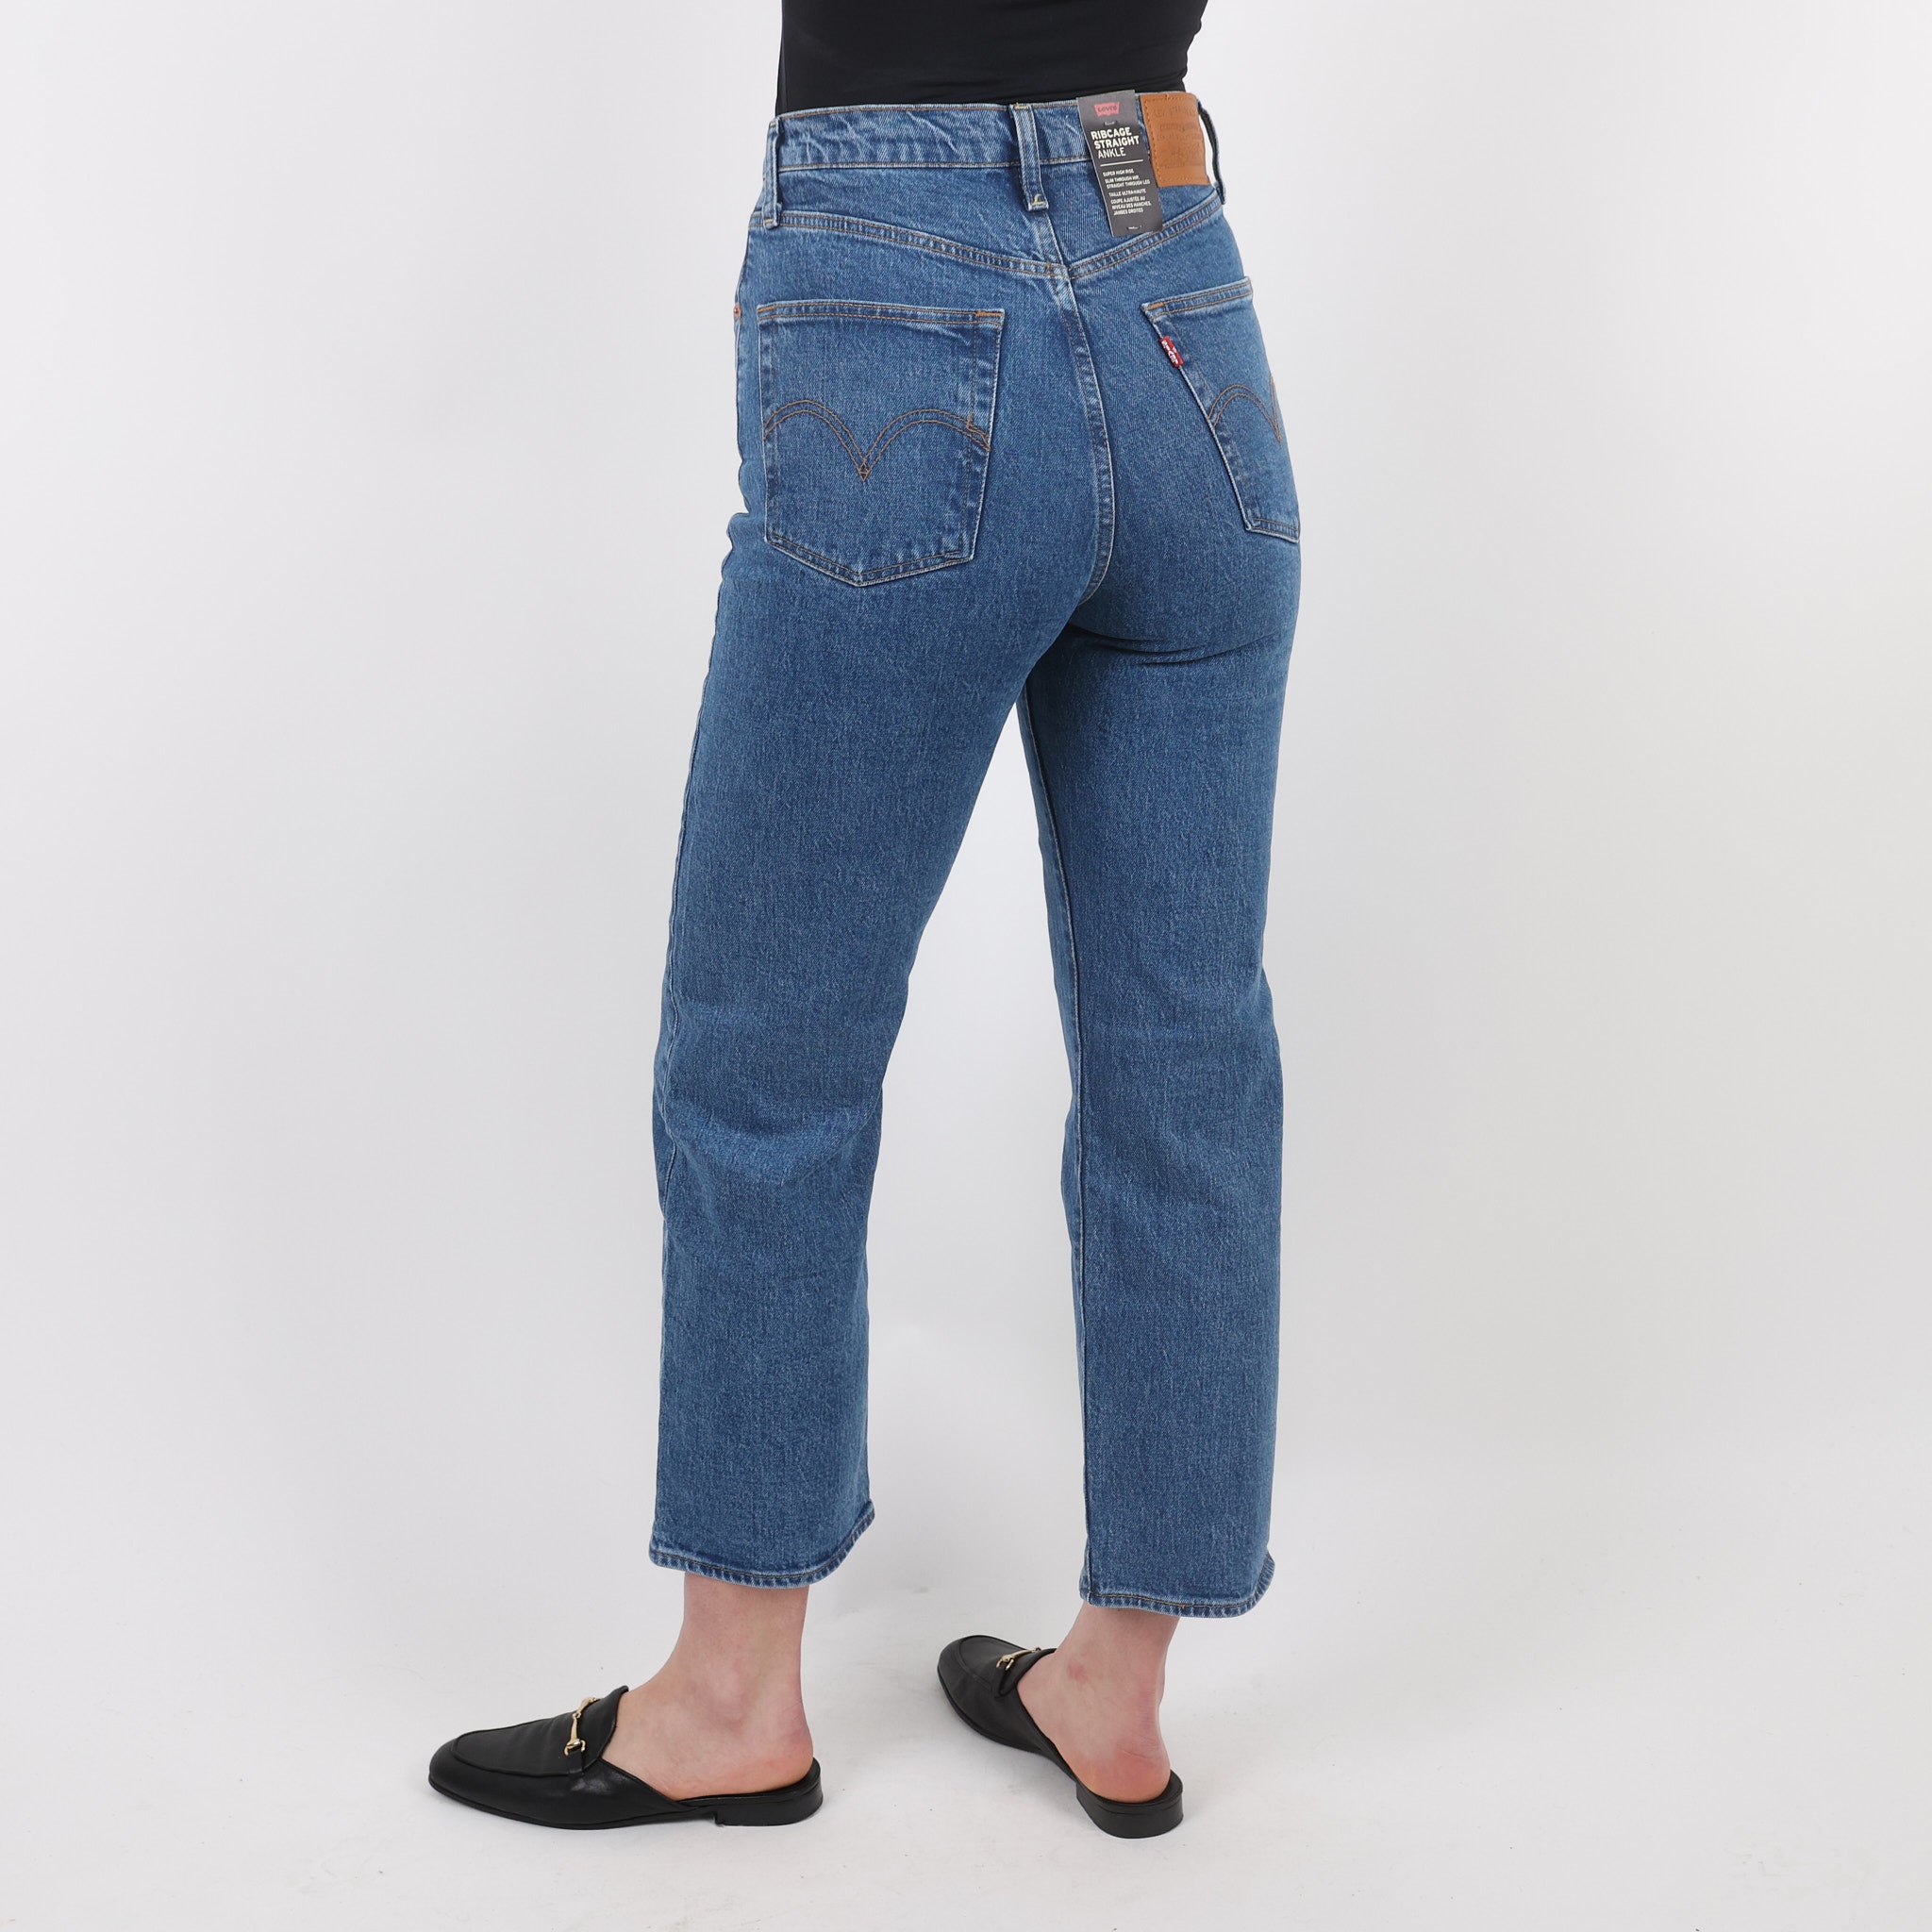 Jeans, Waist 29